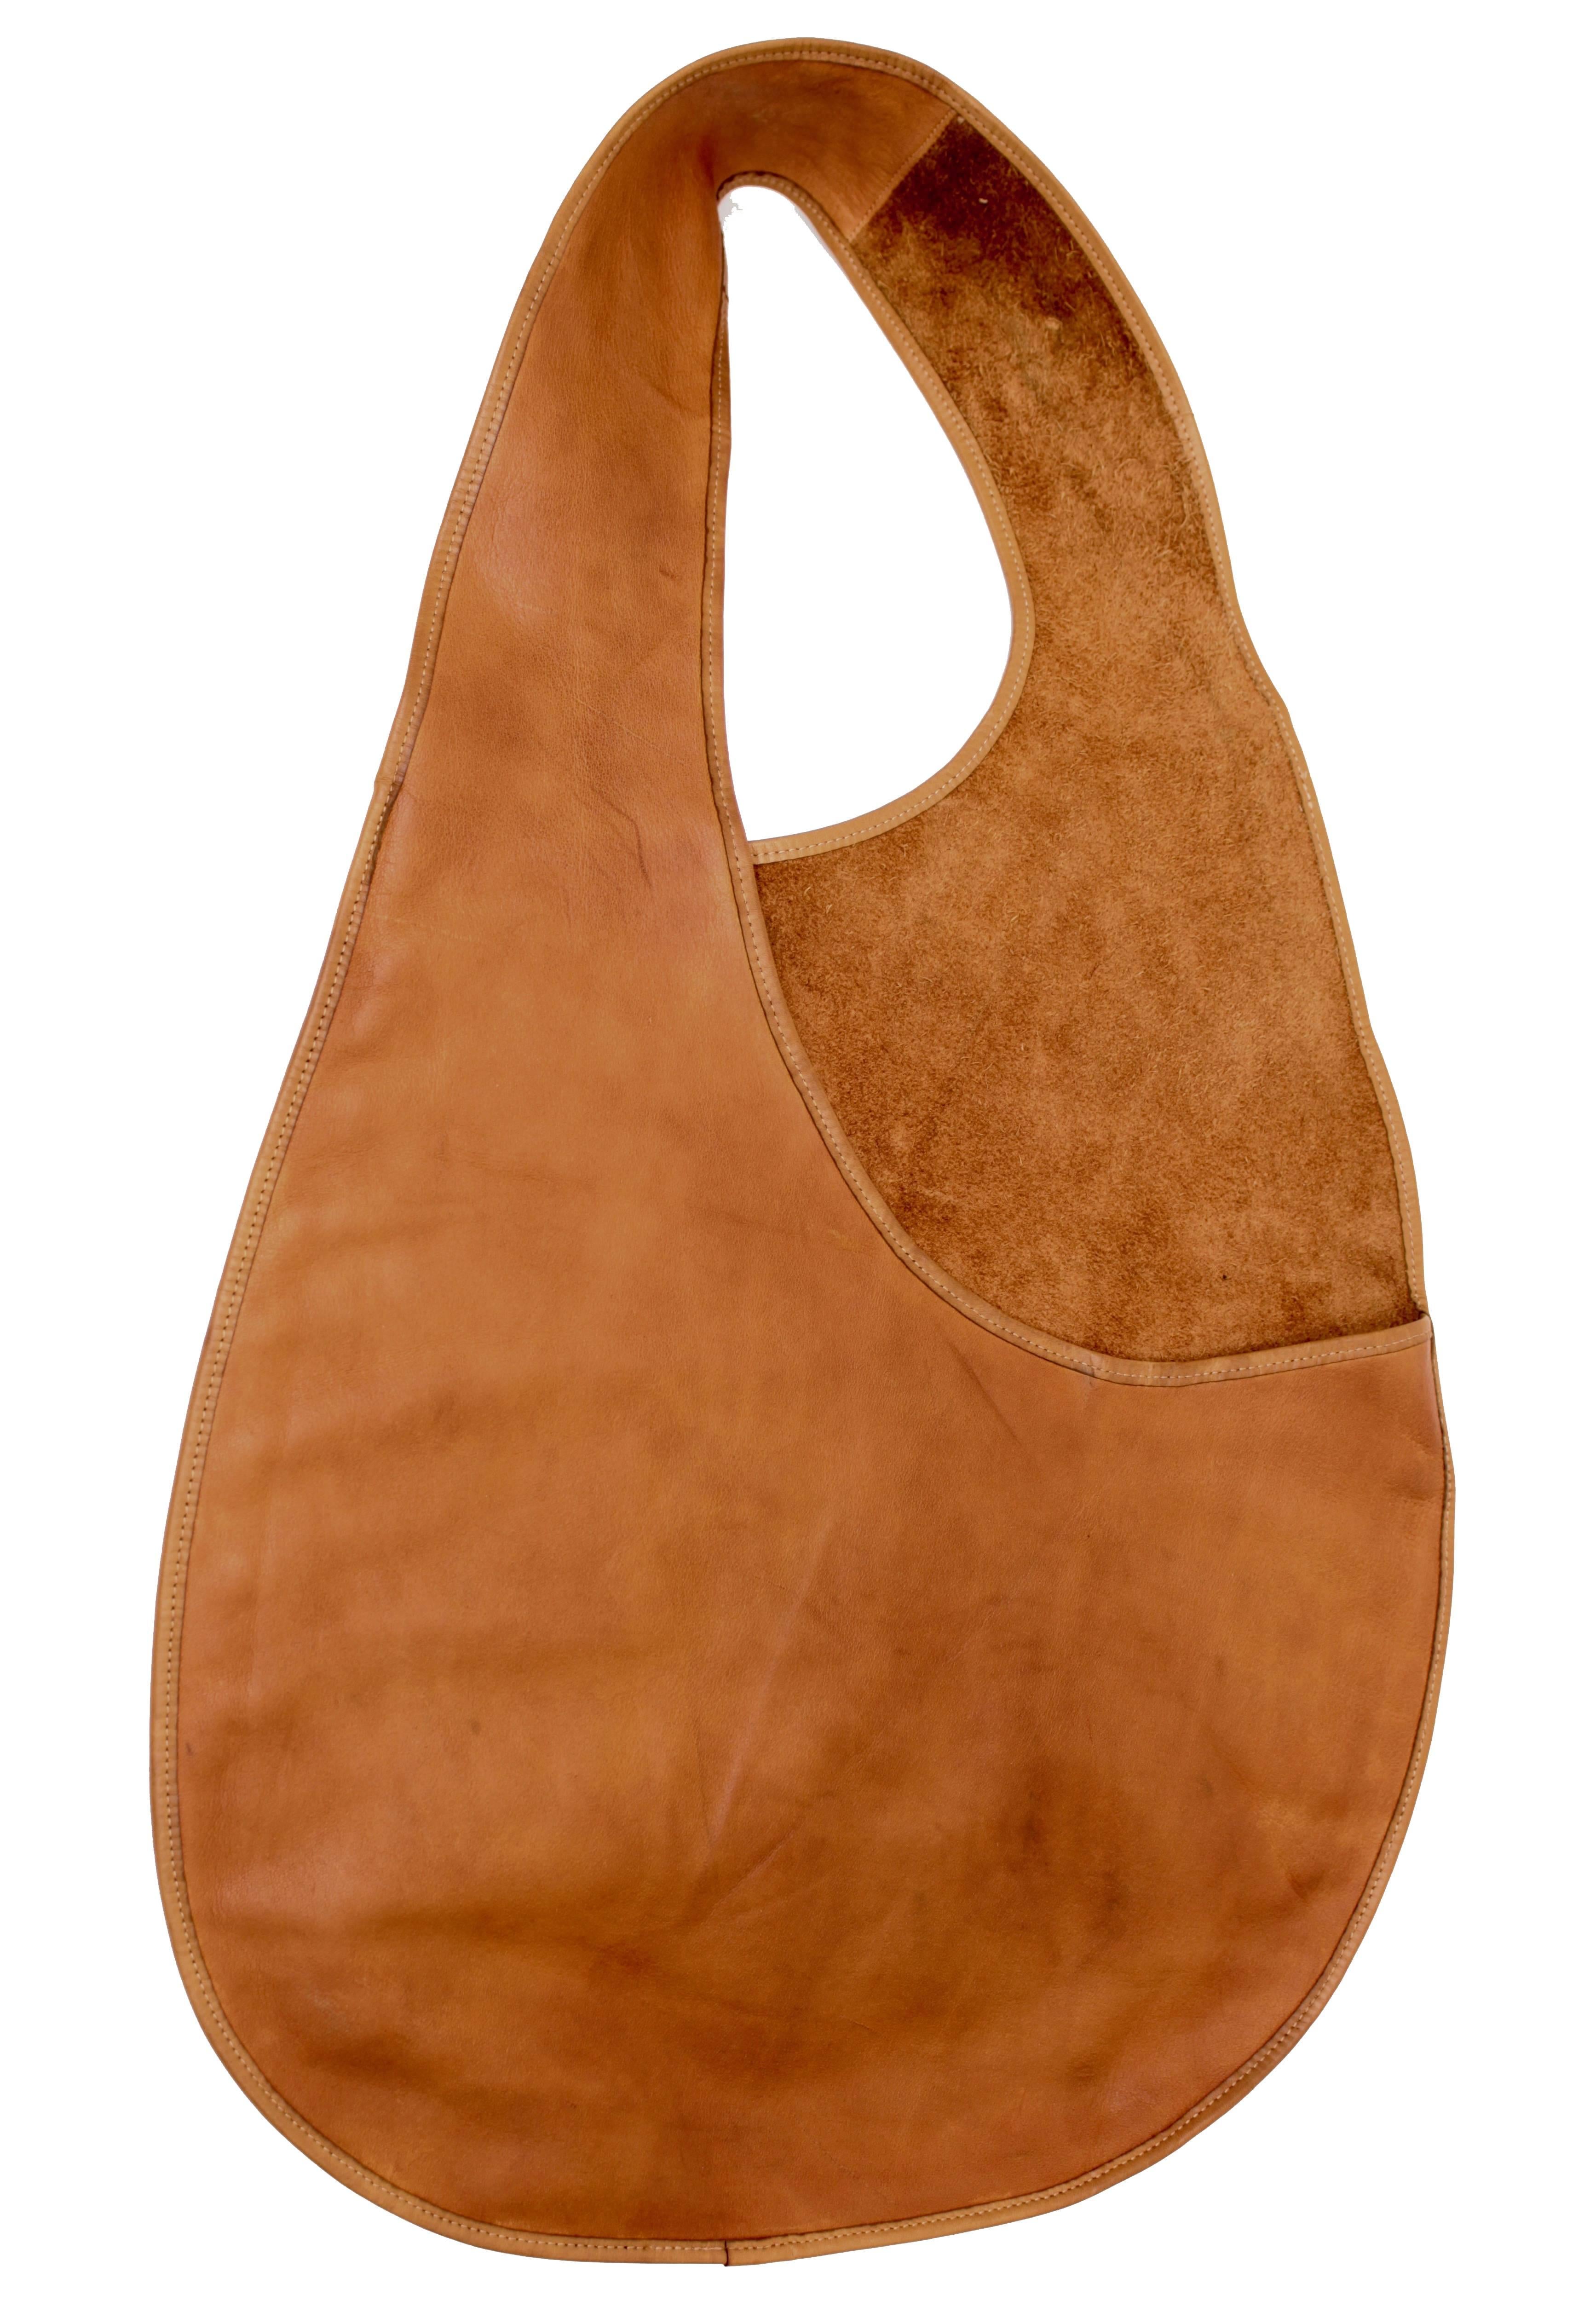 Orange Bonnie Cashin for Coach Body Bag Saddle Leather Sling Tote NYC Pre Creed 1960s